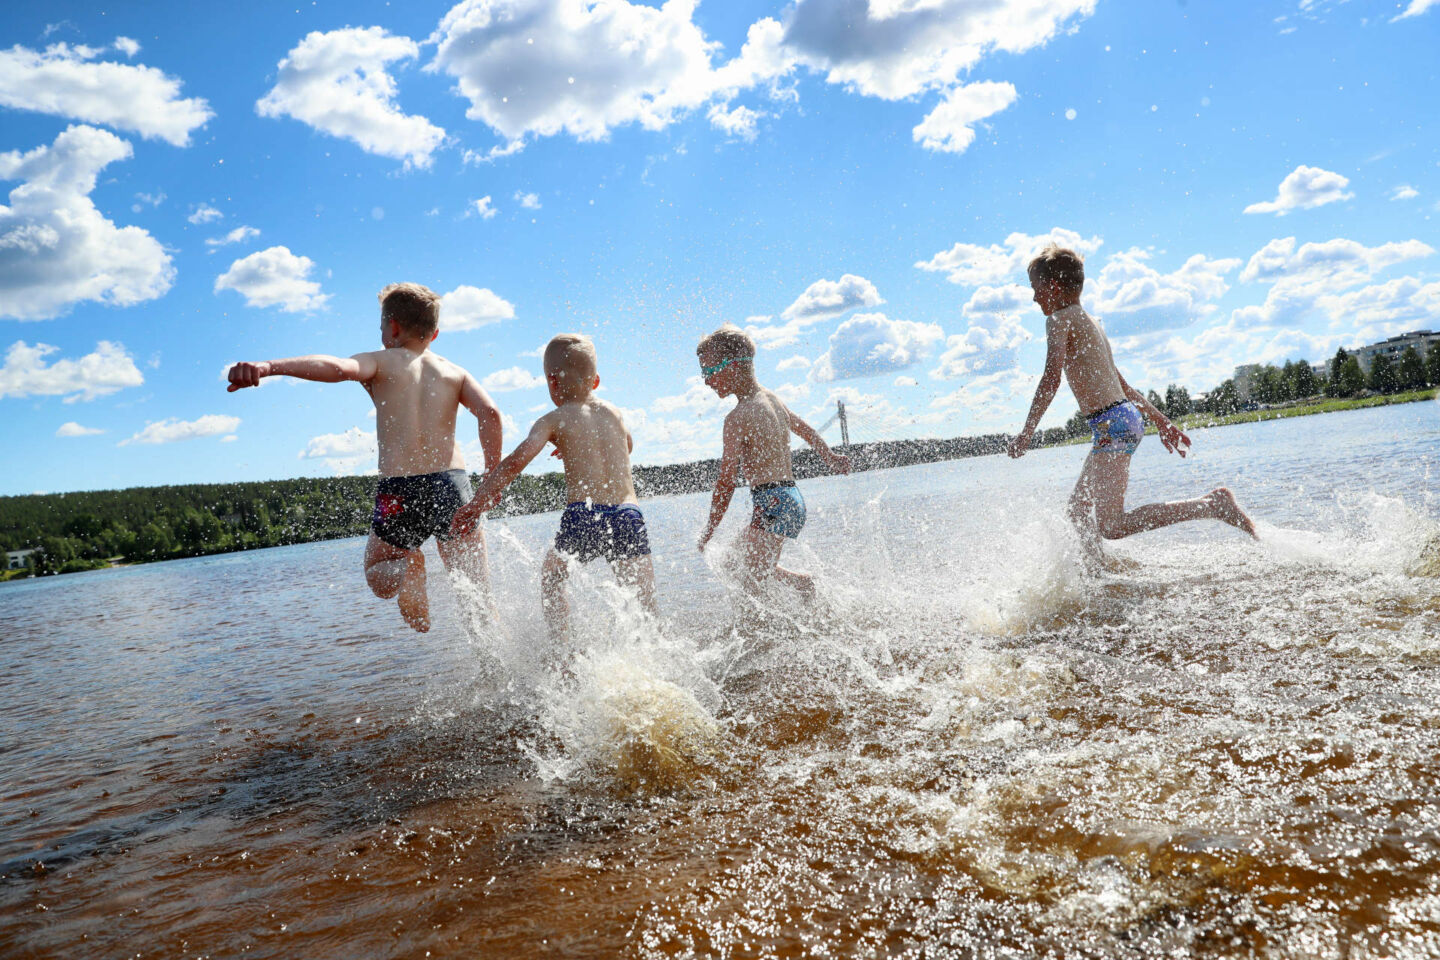 Enjoying the summer water in Finnish Lapland